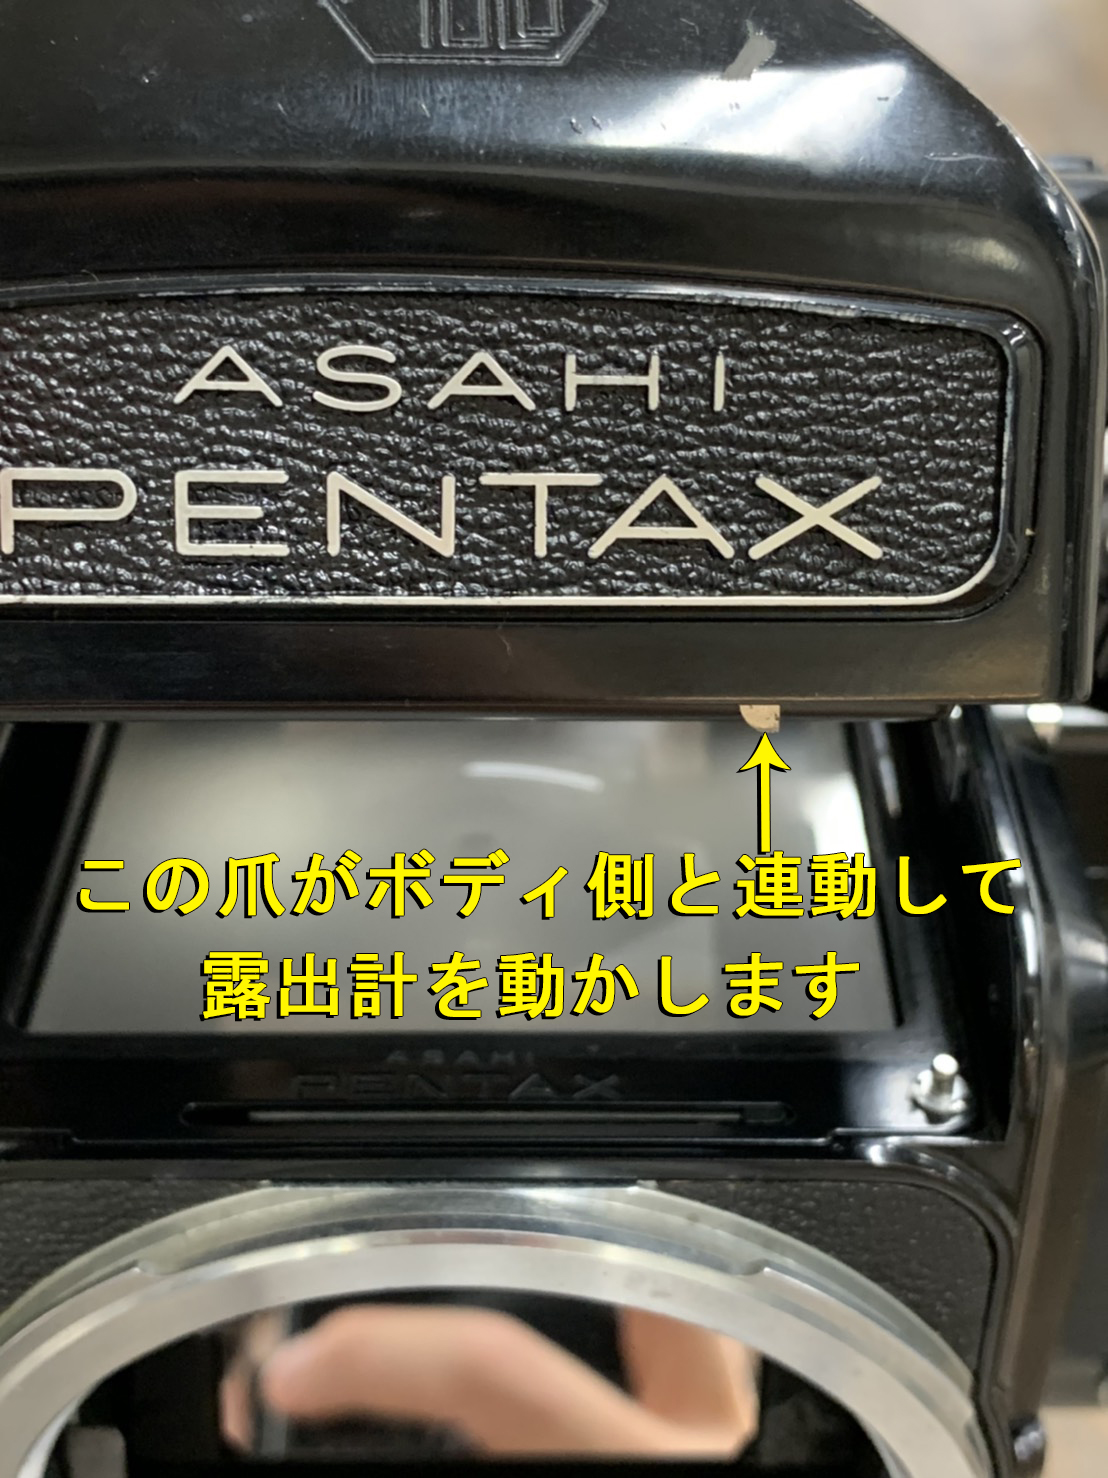 PENTAX67 TTLファインダー ＋ 45mm f4